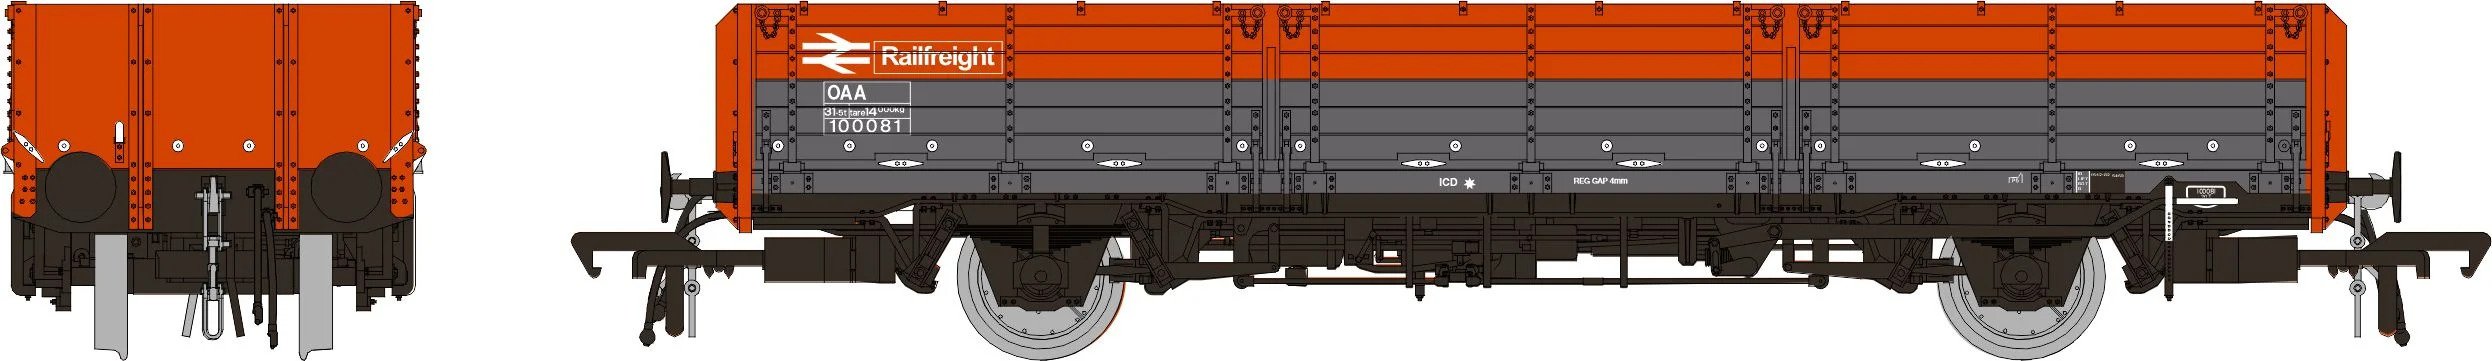 Rapido Trains 915011 OAA No. 100081, Railfreight red/grey